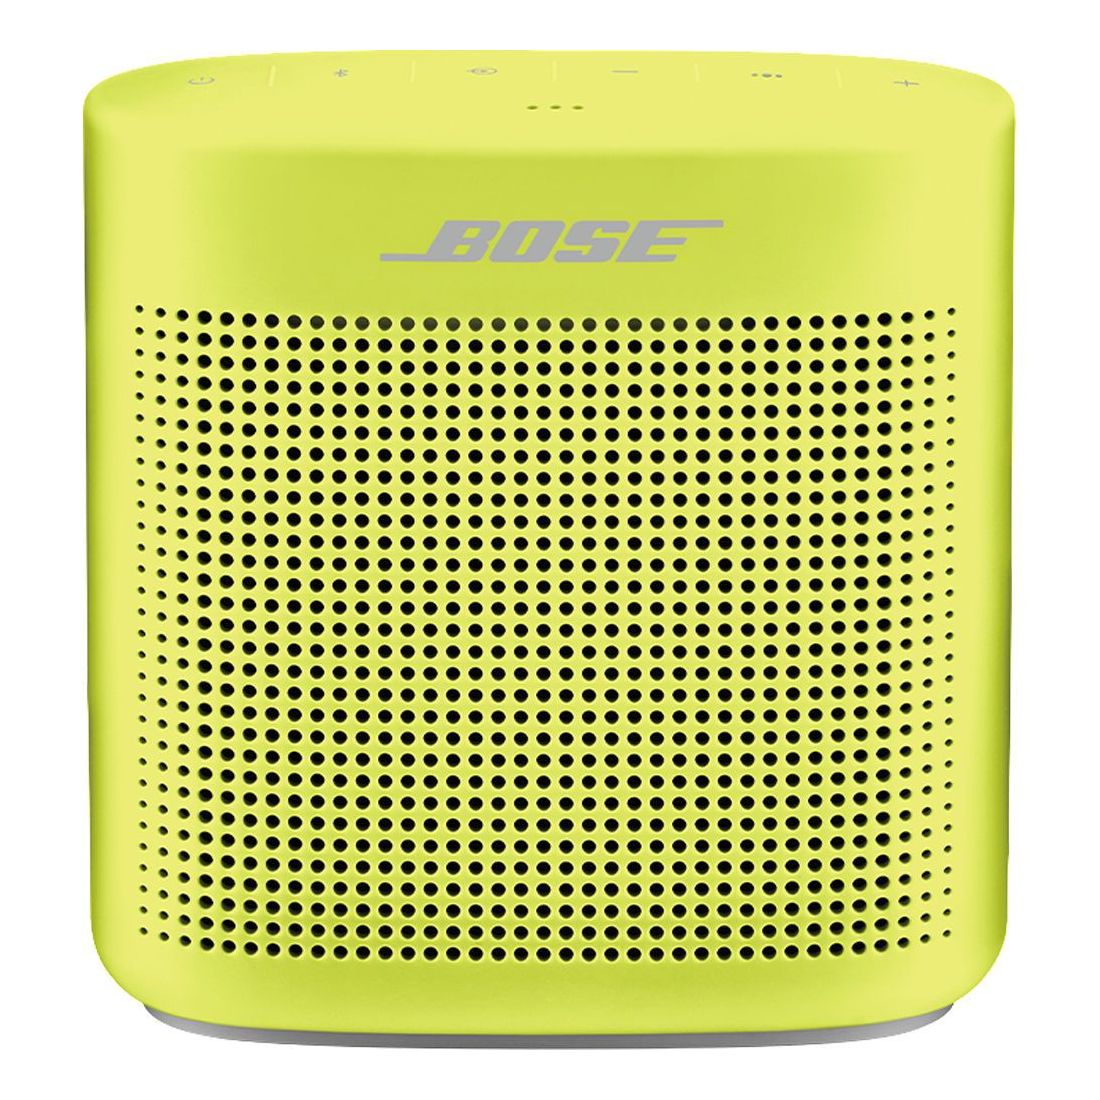 Bose Soundlink Colour Bluetooth Speaker II Yellow Citron